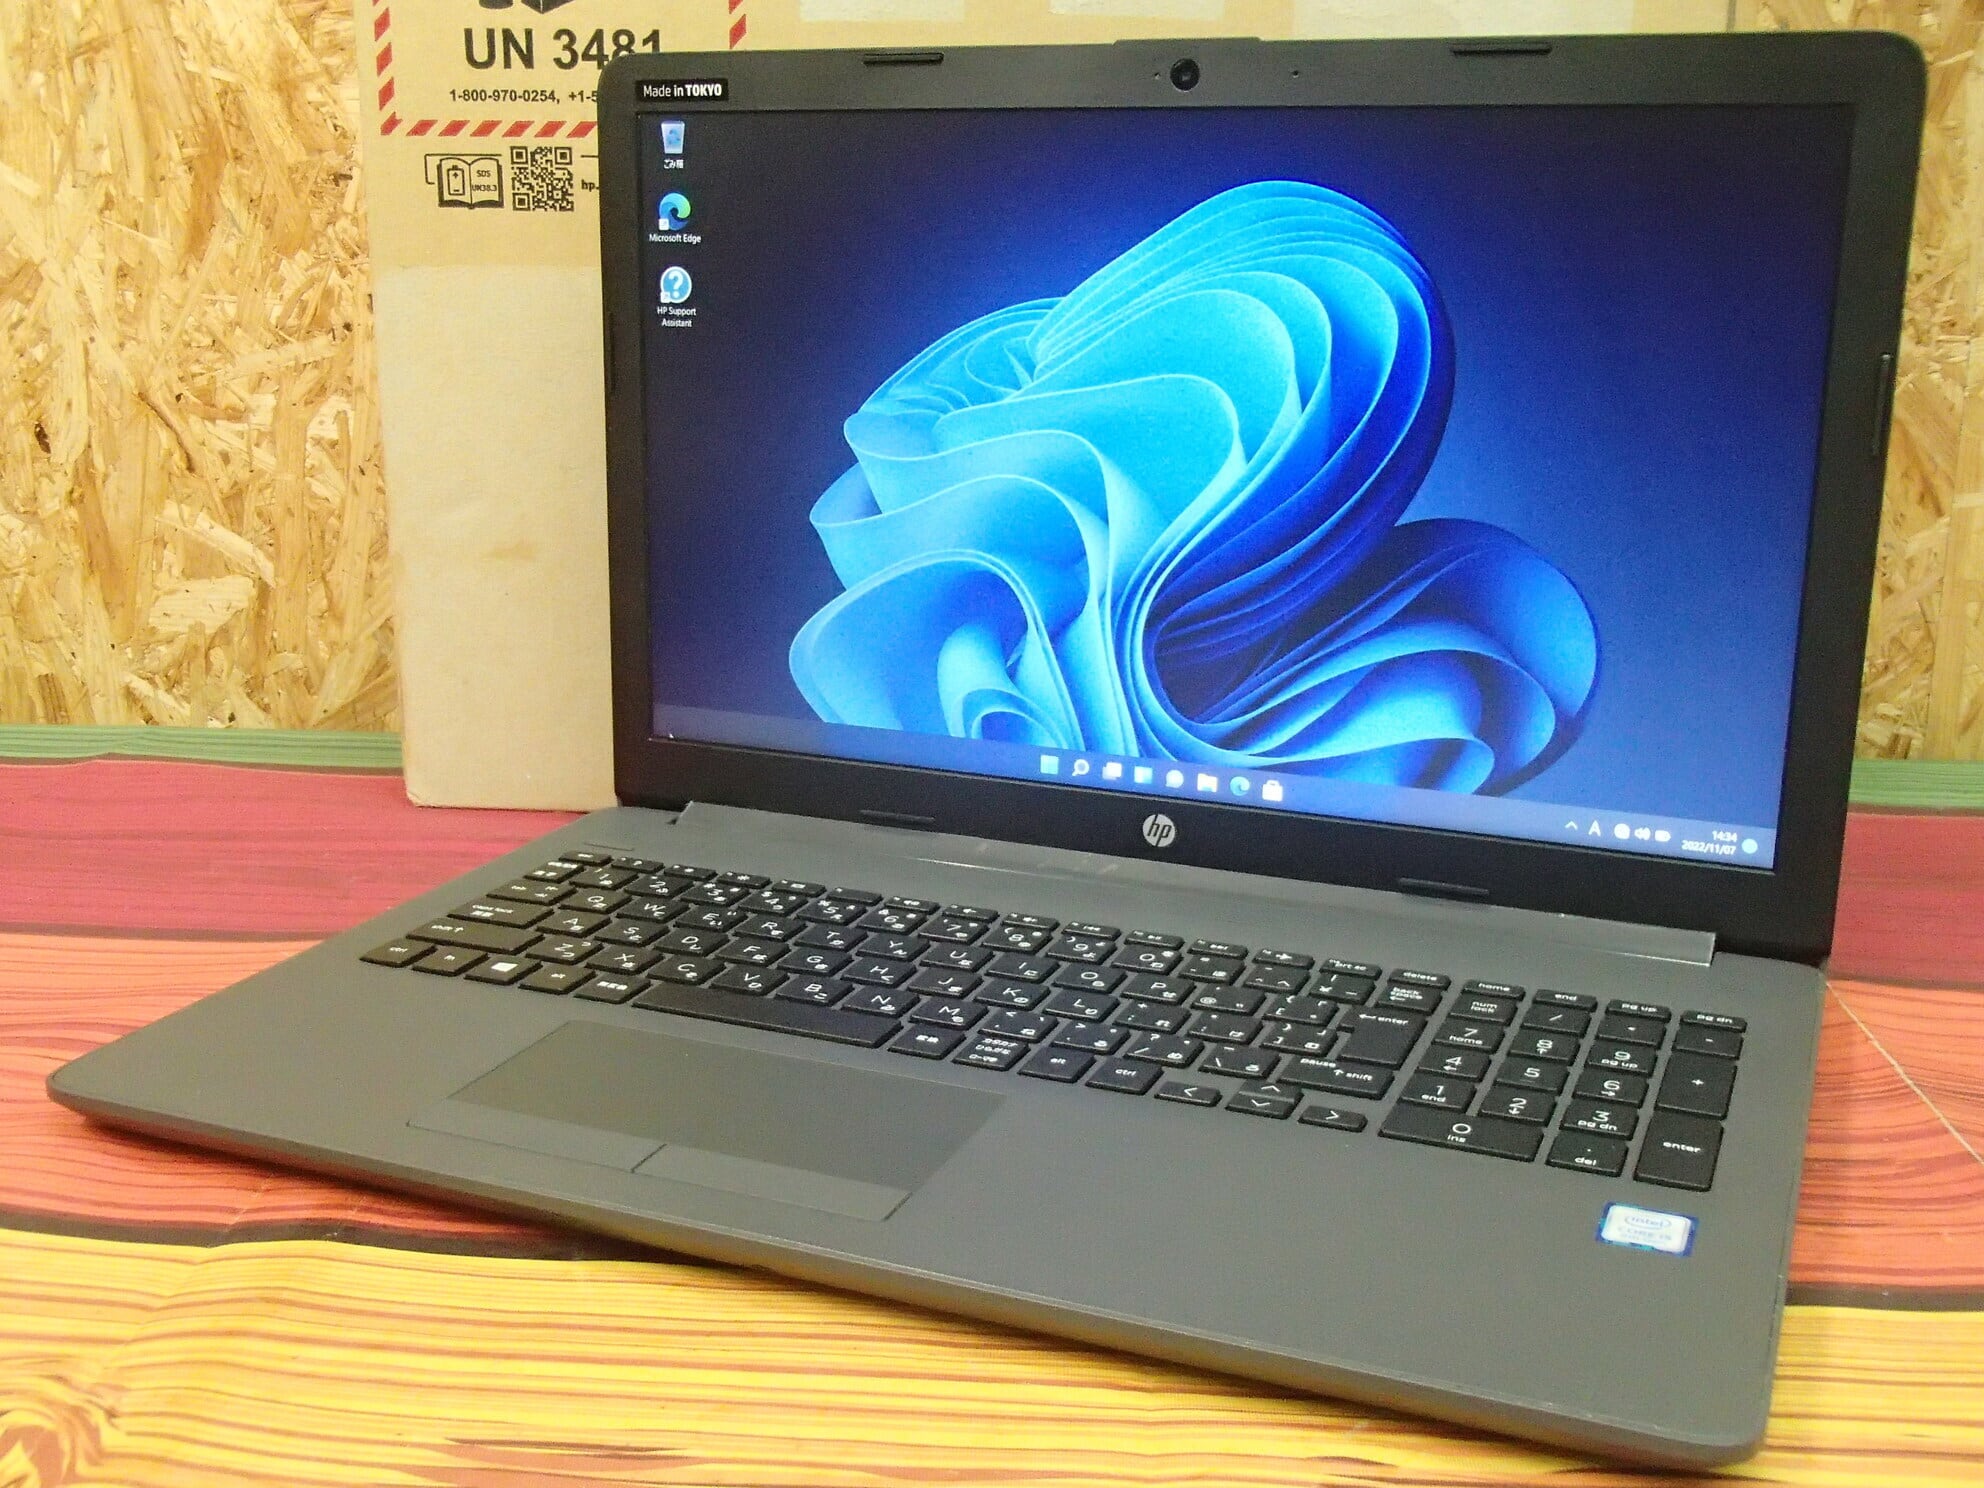 ランク B】HP 250 G7 Notebook PC 5KX41AV 第8世代 Core i5-8265U